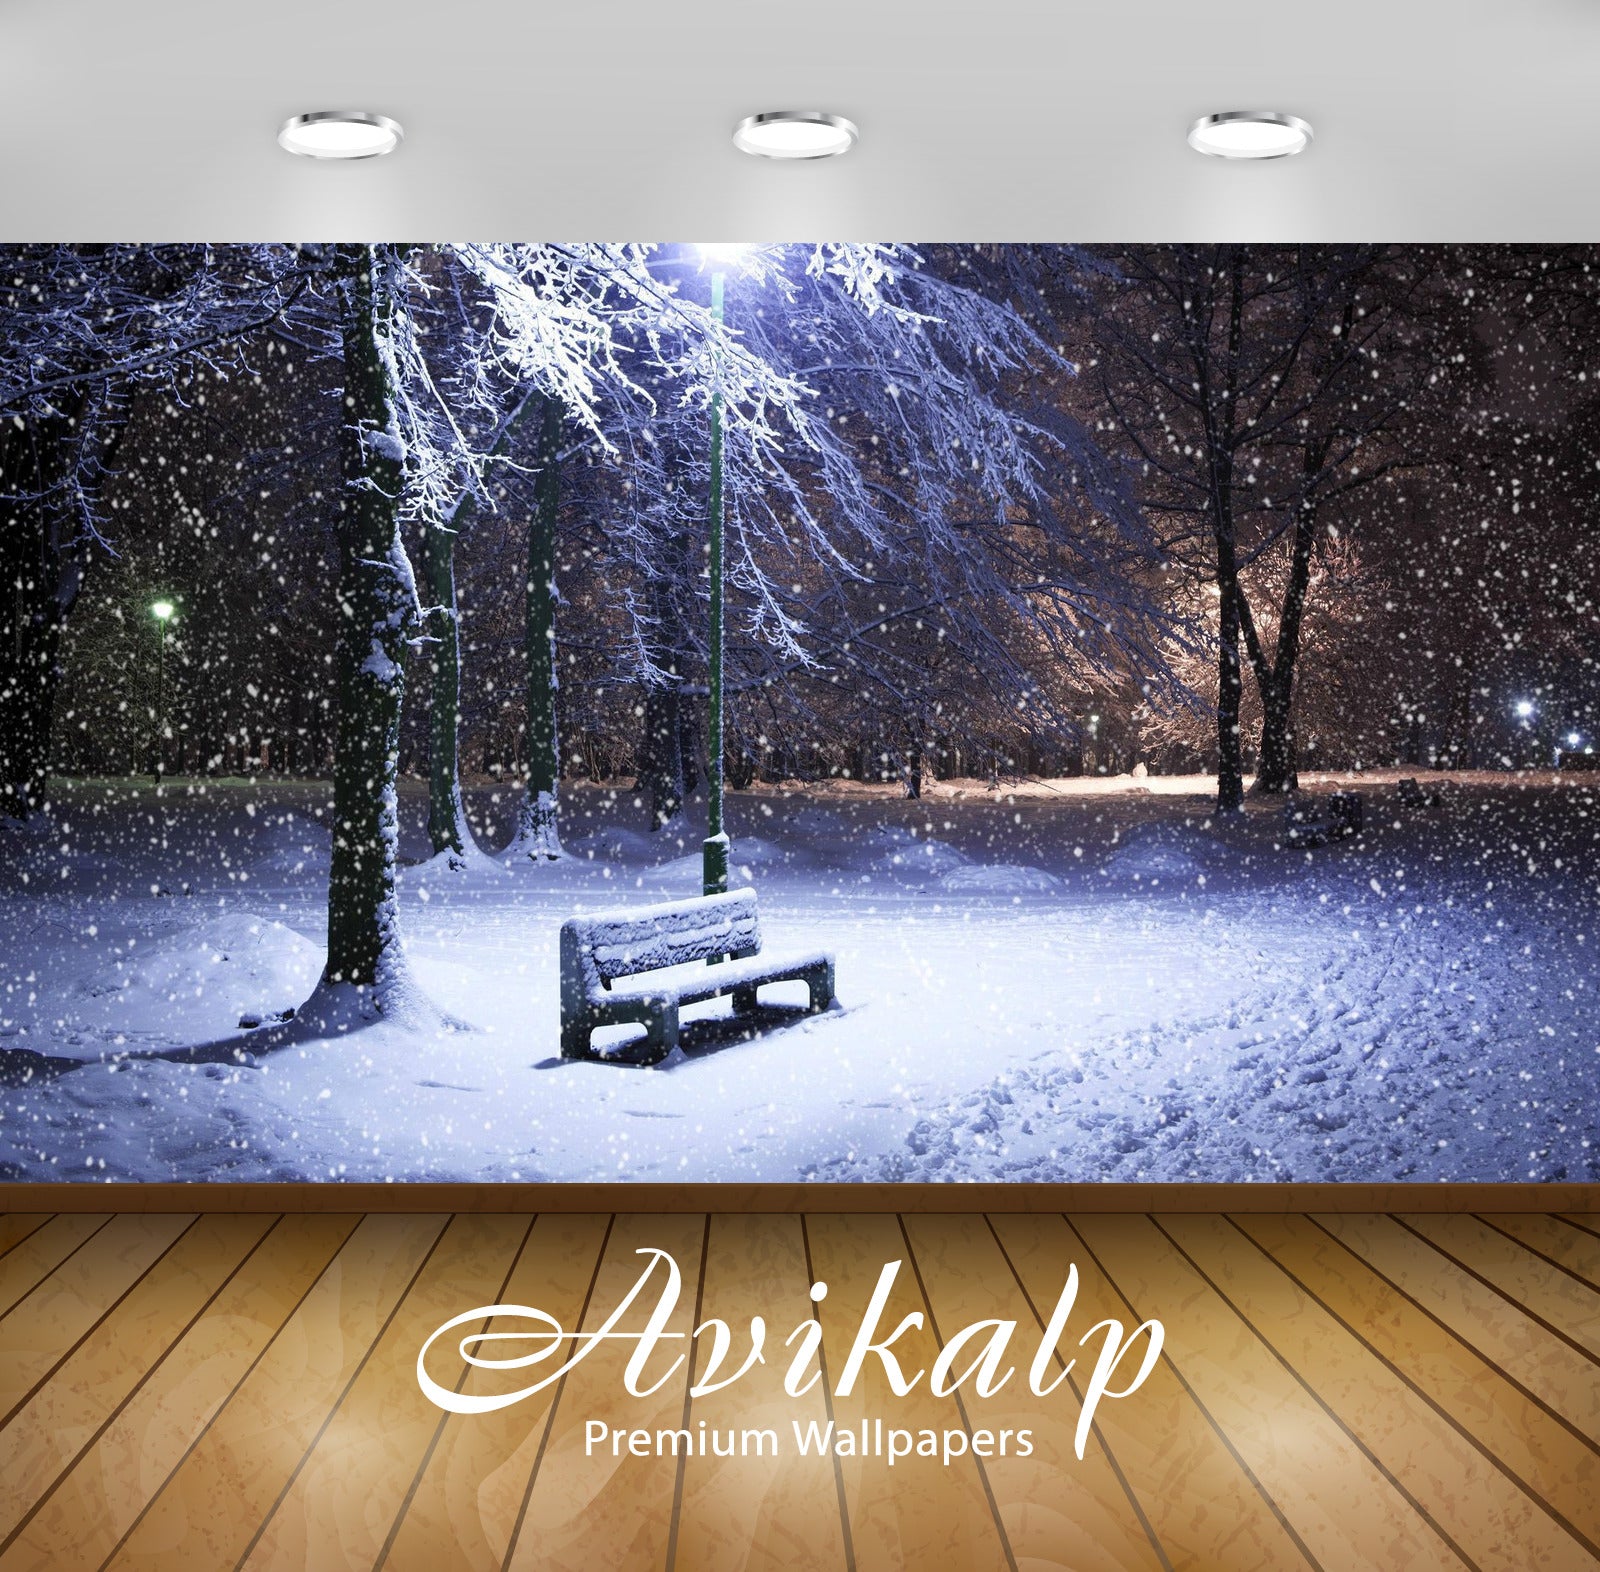 Avikalp Exclusive Awi1800 Beautiful Snowfall Full HD Wallpapers for Living room, Hall, Kids Room, Ki